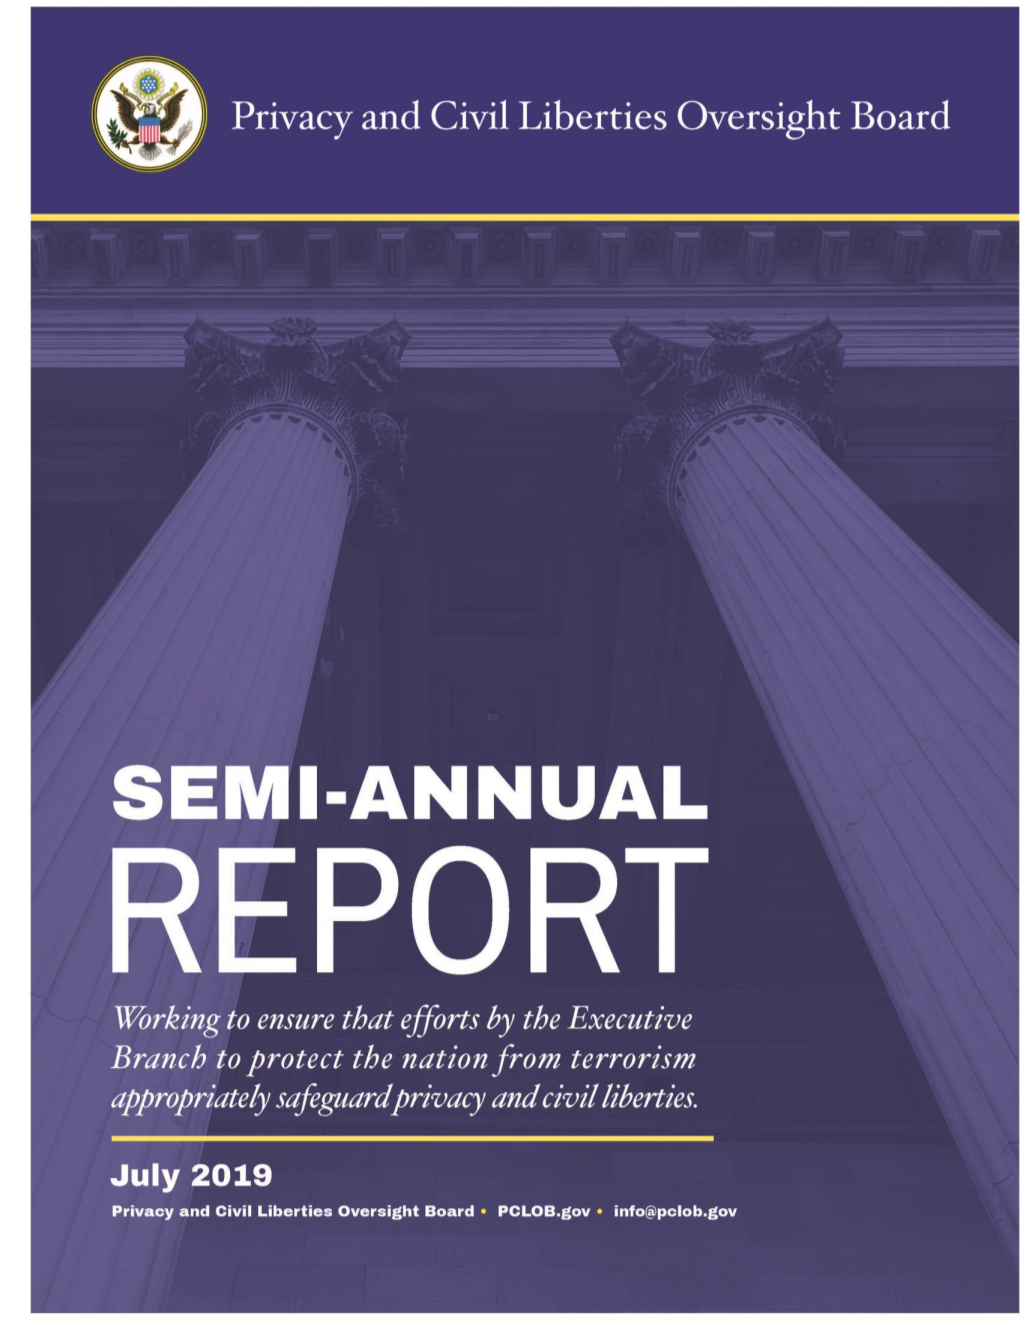 PRIVACY and CIVIL LIBERTIES OVERSIGHT BOARD Semi-Annual Report July 2019